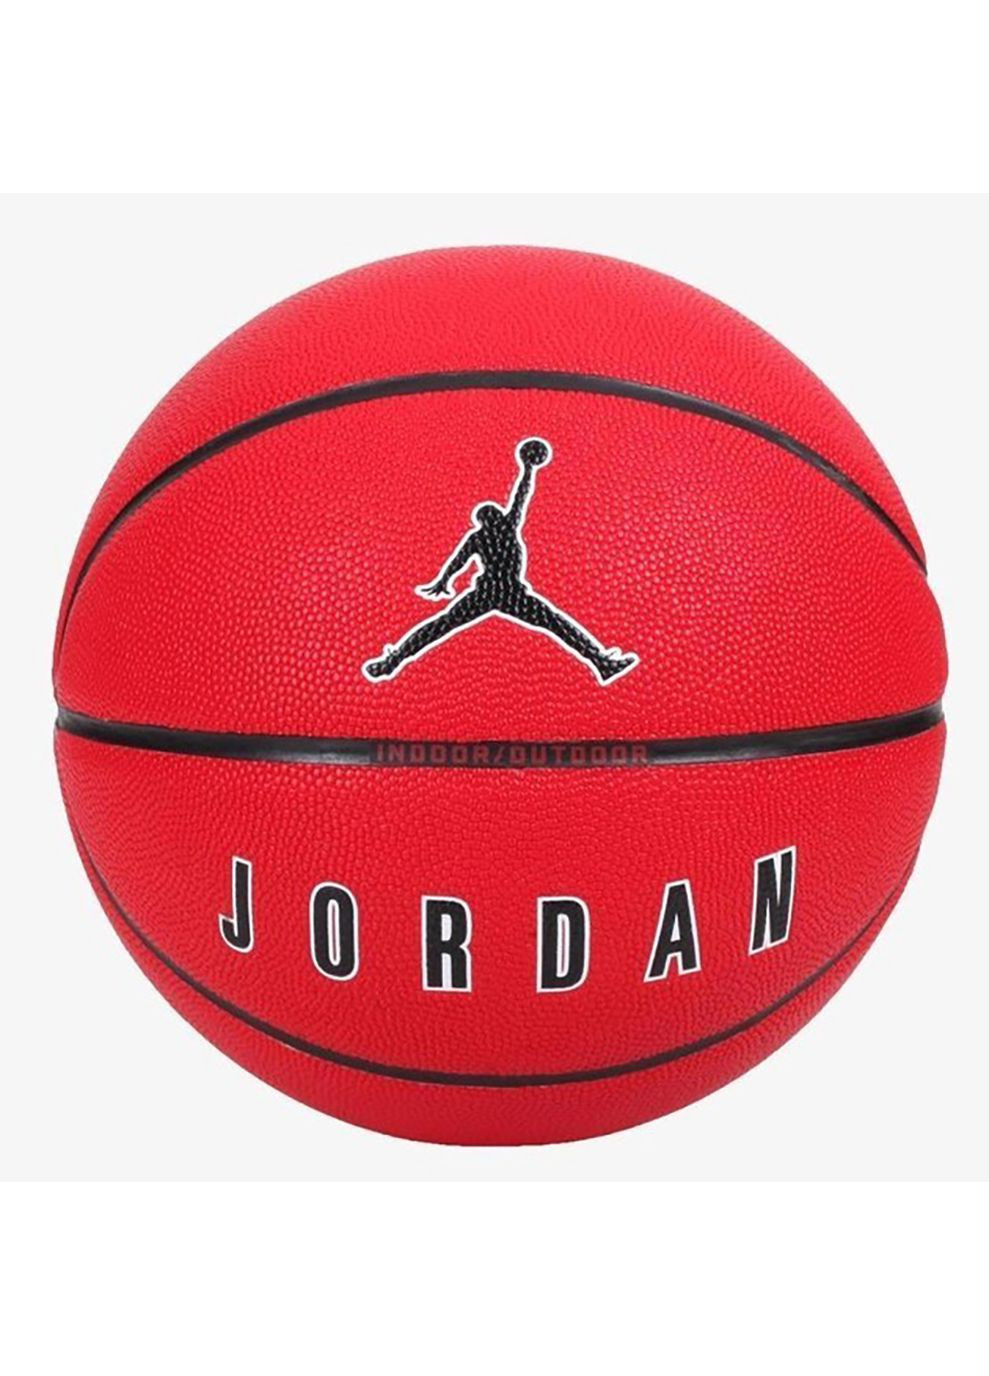 Мяч баскетбольный NIKE ULTIMATE 2.0 8P DEFLATED UNIVERSITY RED/BLACK/WHITE/BLACK size 7 Jordan (268833798)